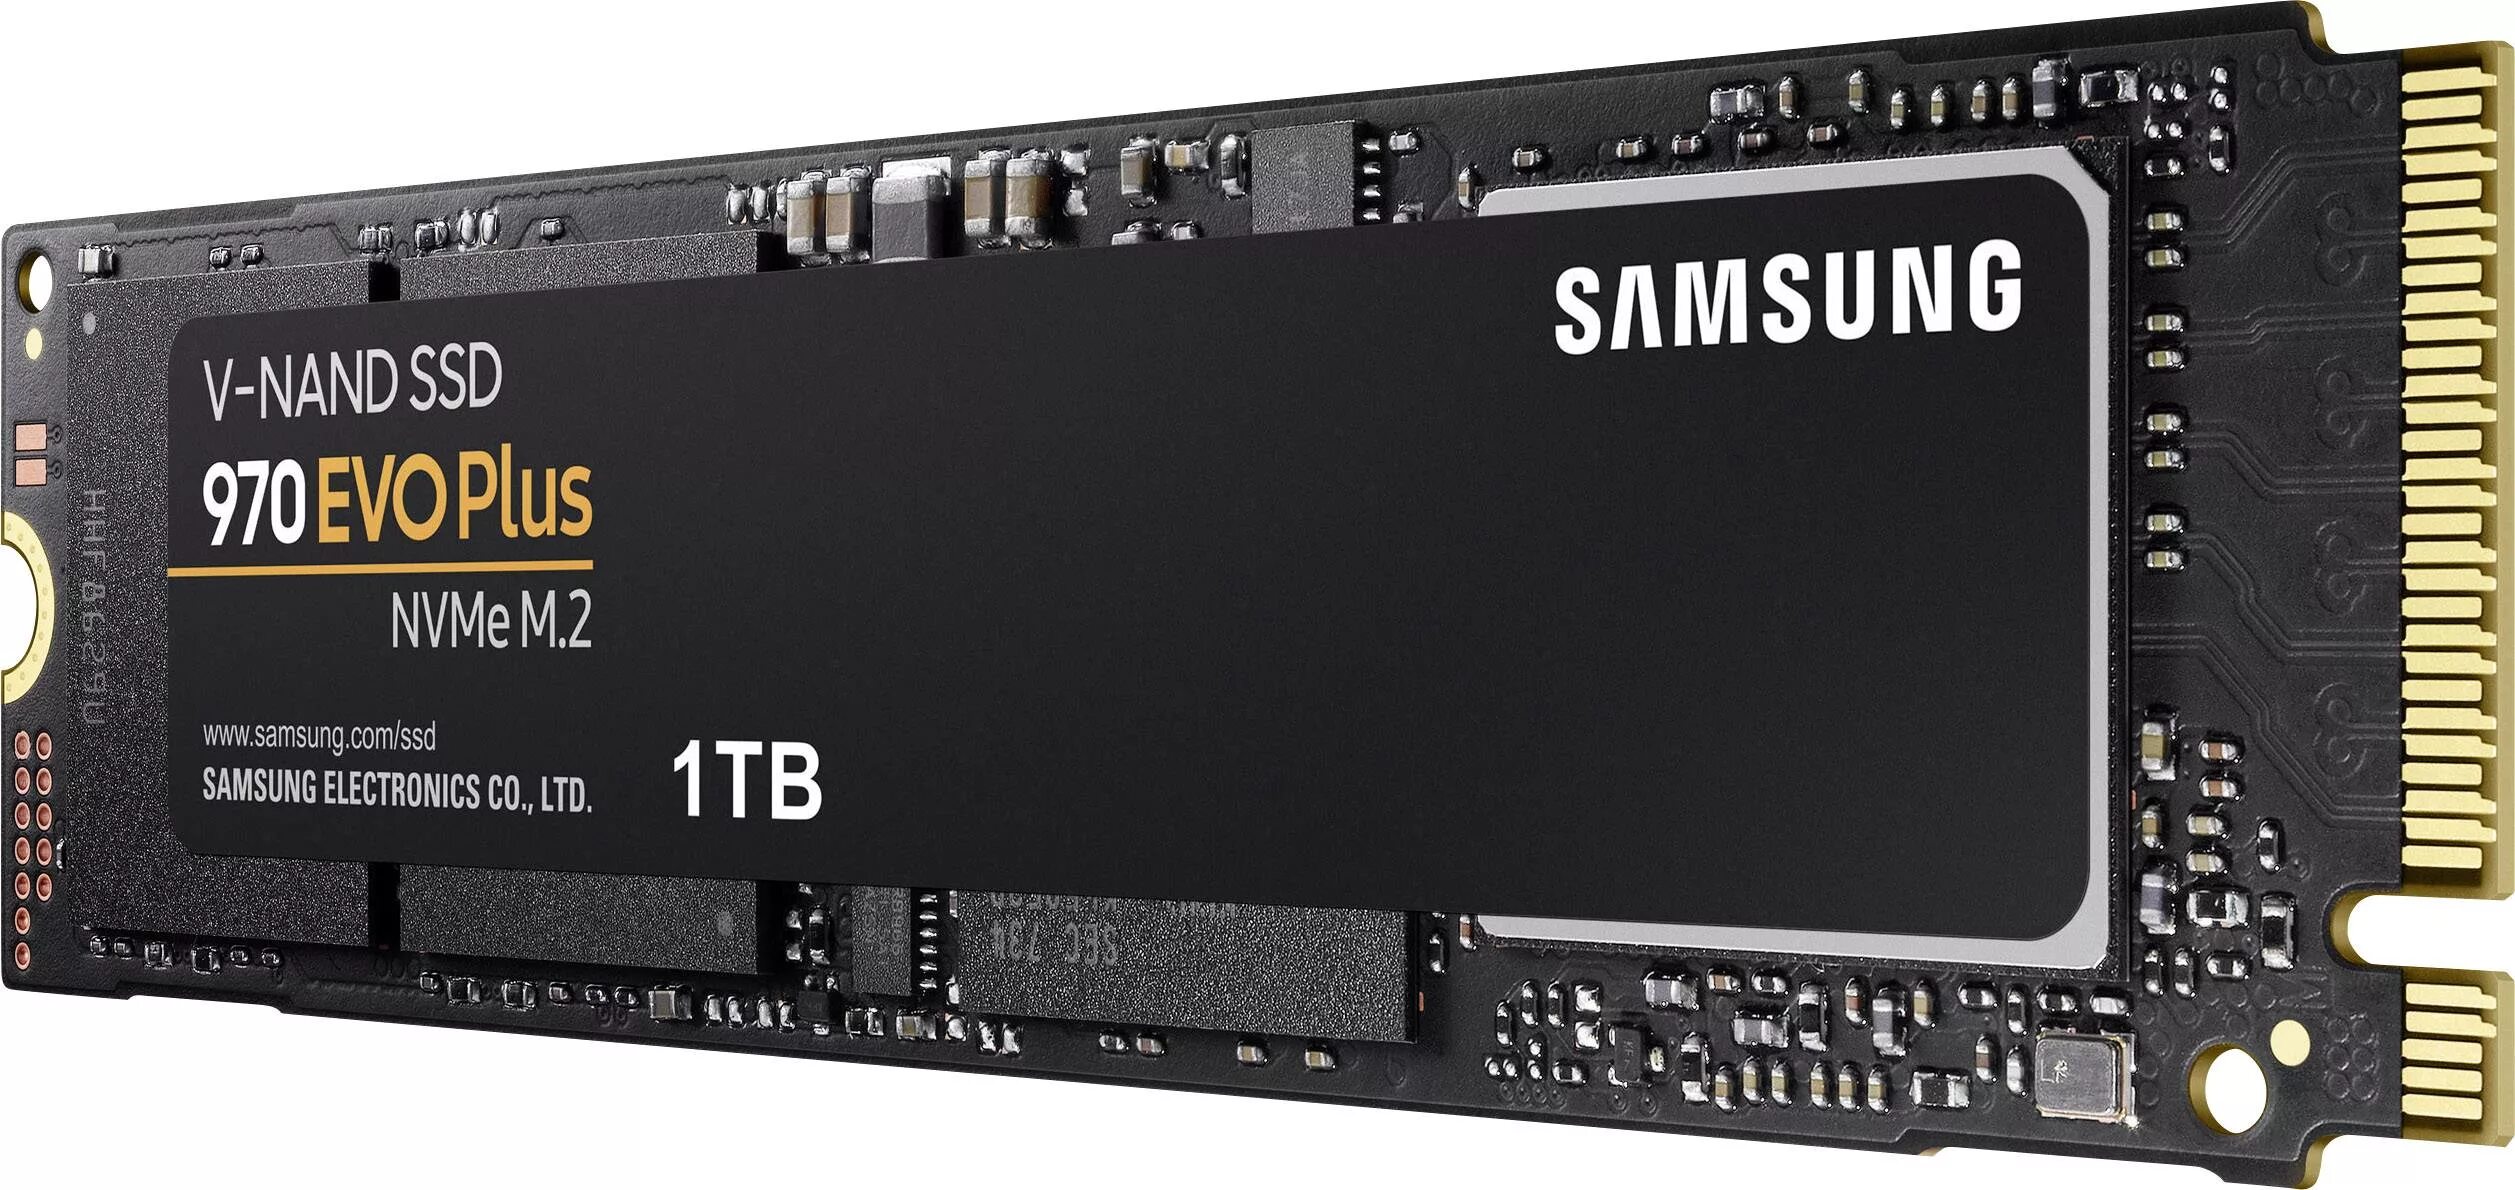 Ssd m2 samsung купить. SSD m2 Samsung 970 EVO Plus. Samsung SSD 970 EVO Plus 500gb. Накопитель SSD 500гб m.2 накопитель Samsung 970 EVO Plus MZ-v7s500bw. Samsung 970 EVO Plus SSD 500gb - m.2 NVME.